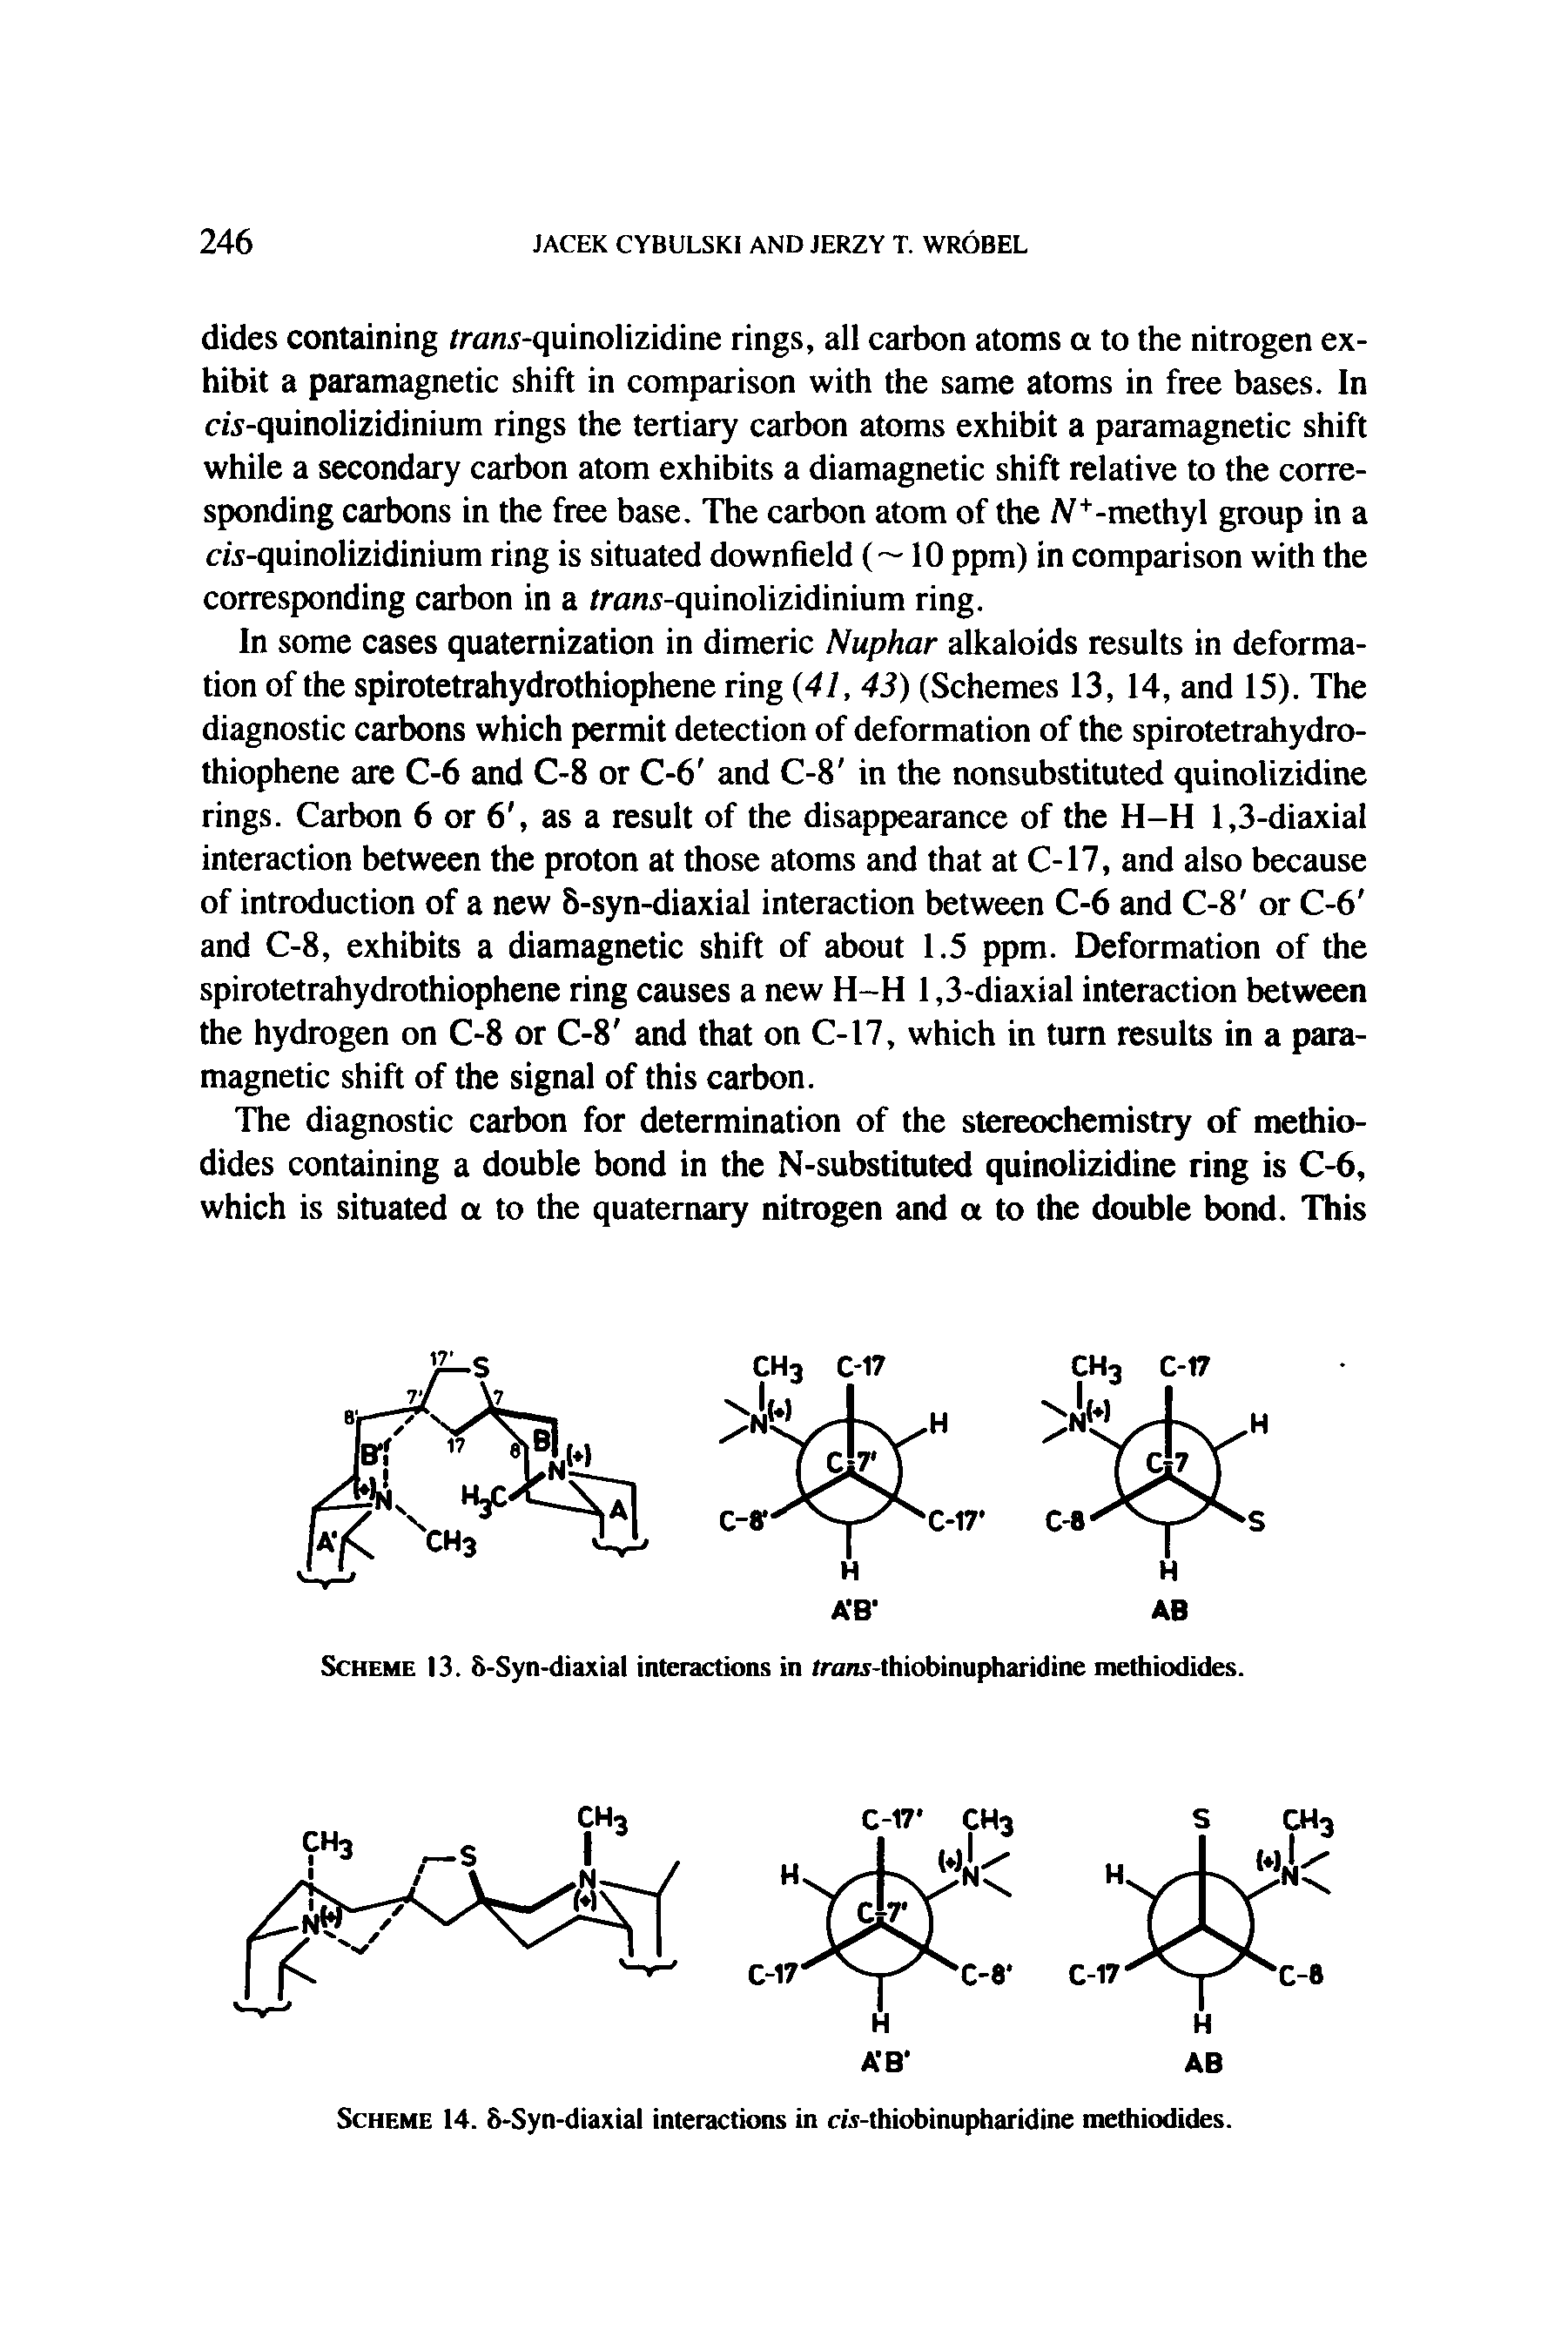 Scheme 13. 8-Syn-diaxial interactions in traru-thiobinupharidine methiodides.